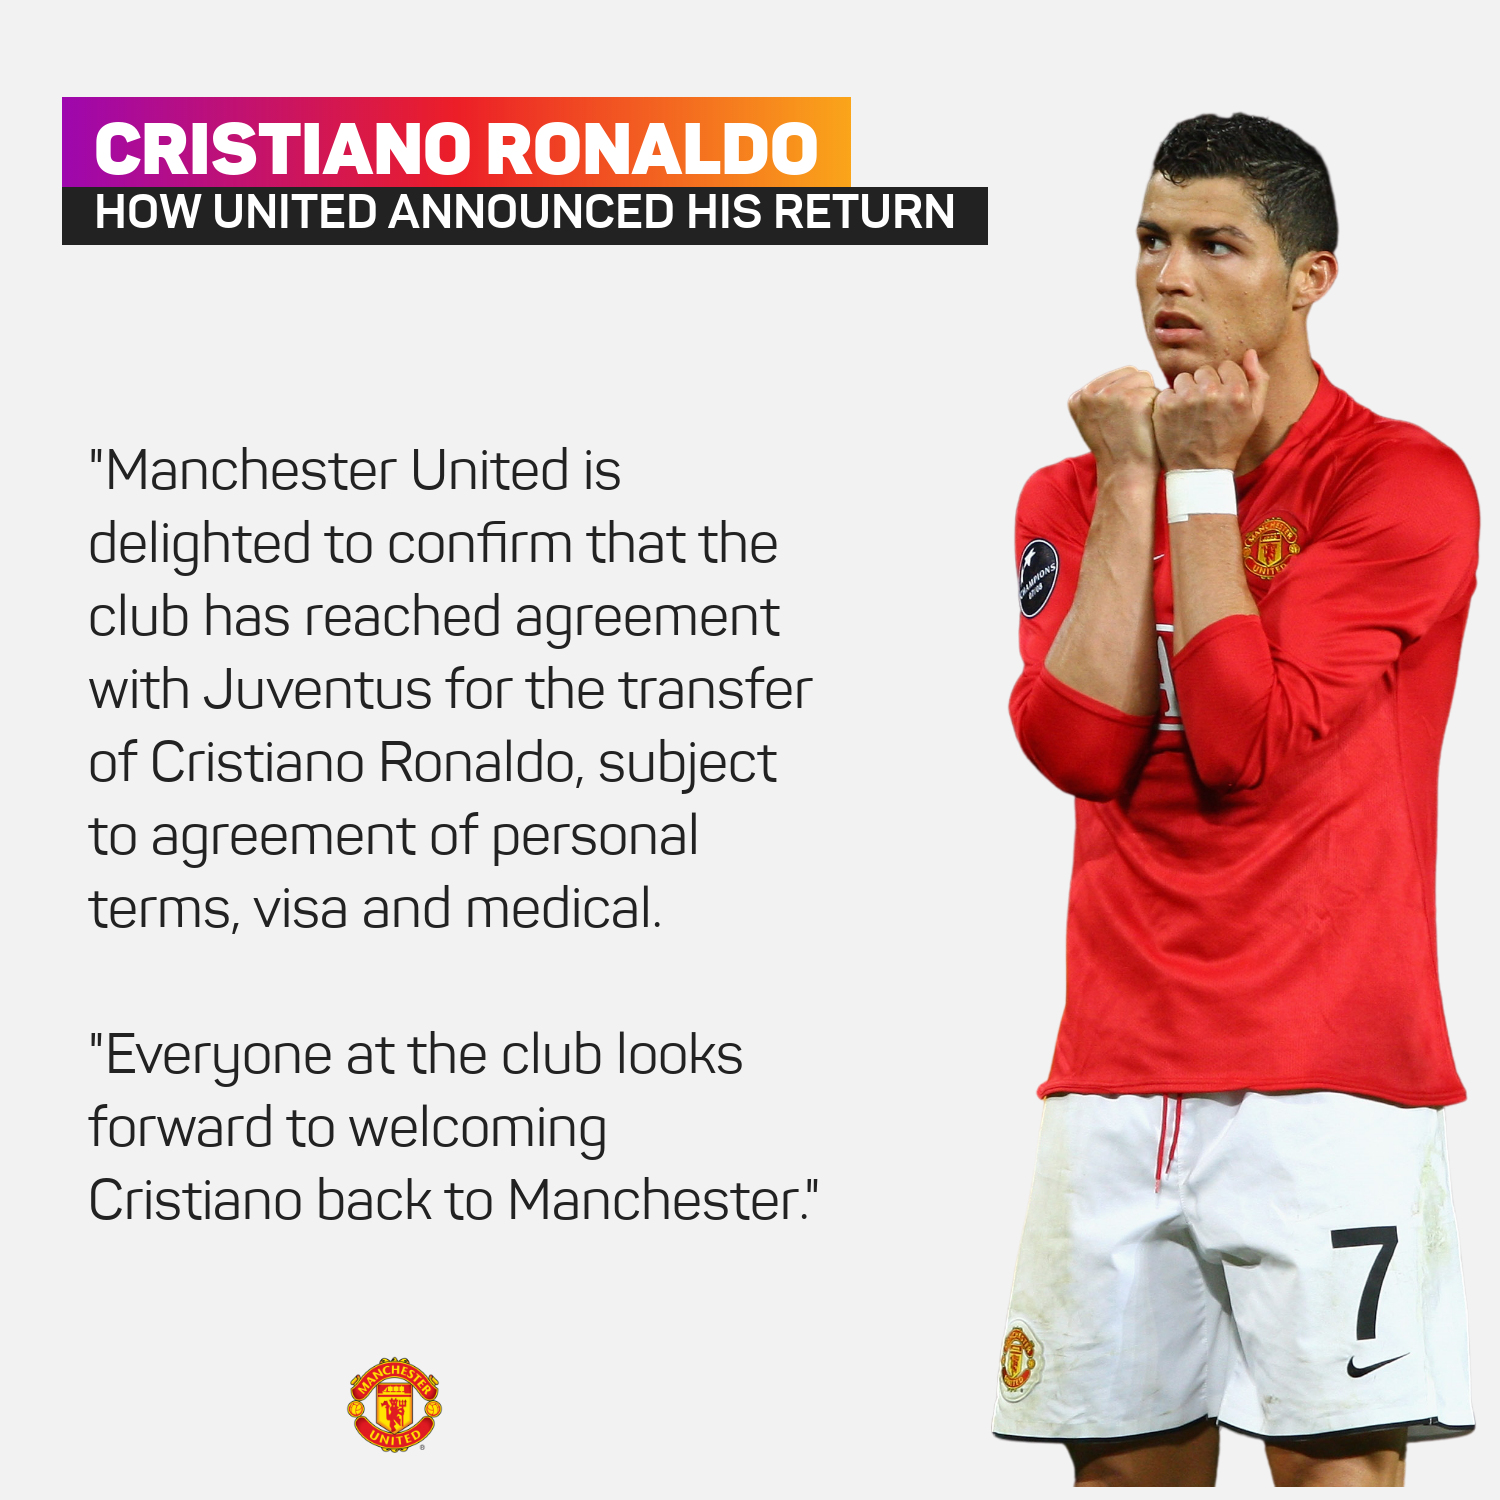 Cristiano Ronaldo is returning to Manchester United